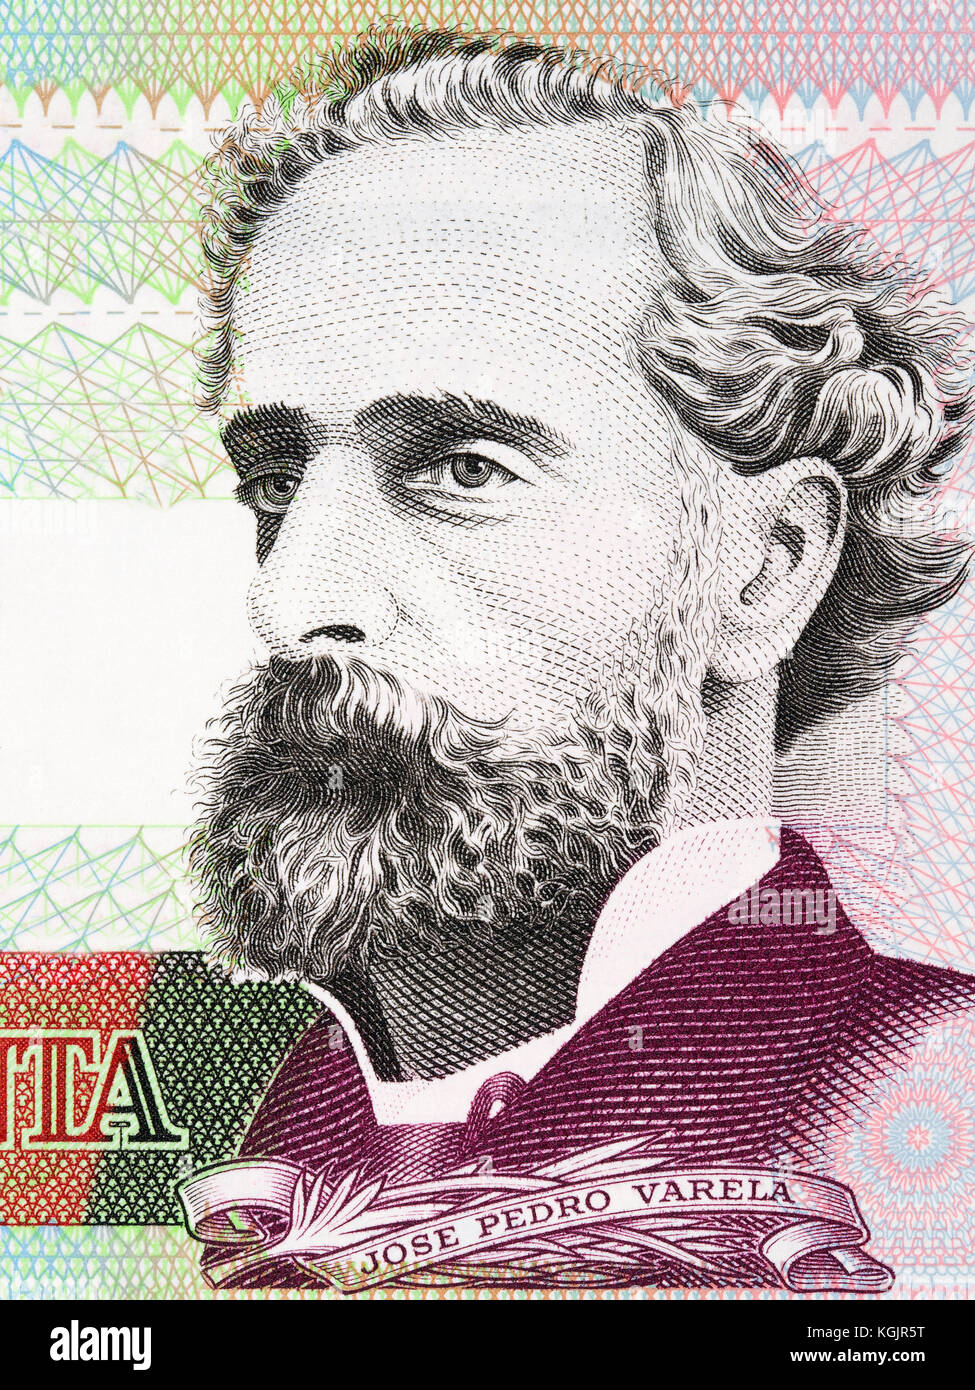 Jose Pedro Varela portrait from Uruguayan Pesos Stock Photo